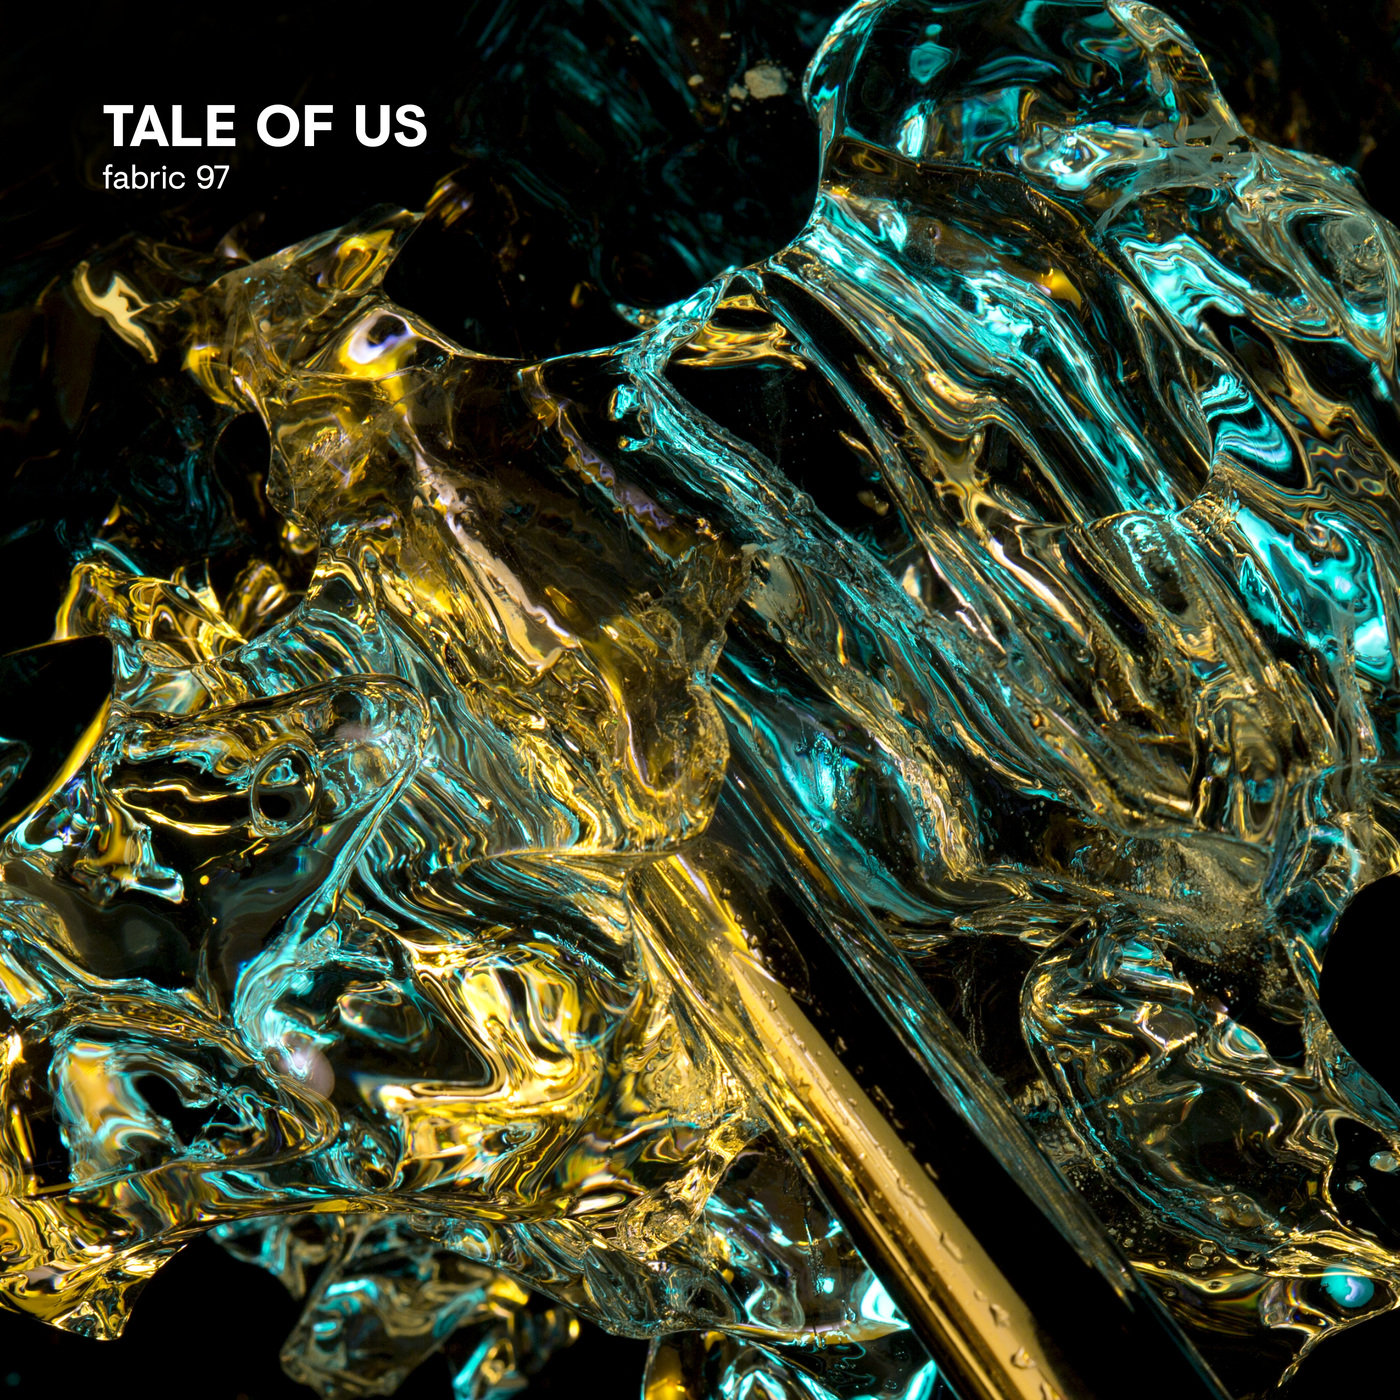 image cover: VA - fabric 97: Tale Of Us / Fabric